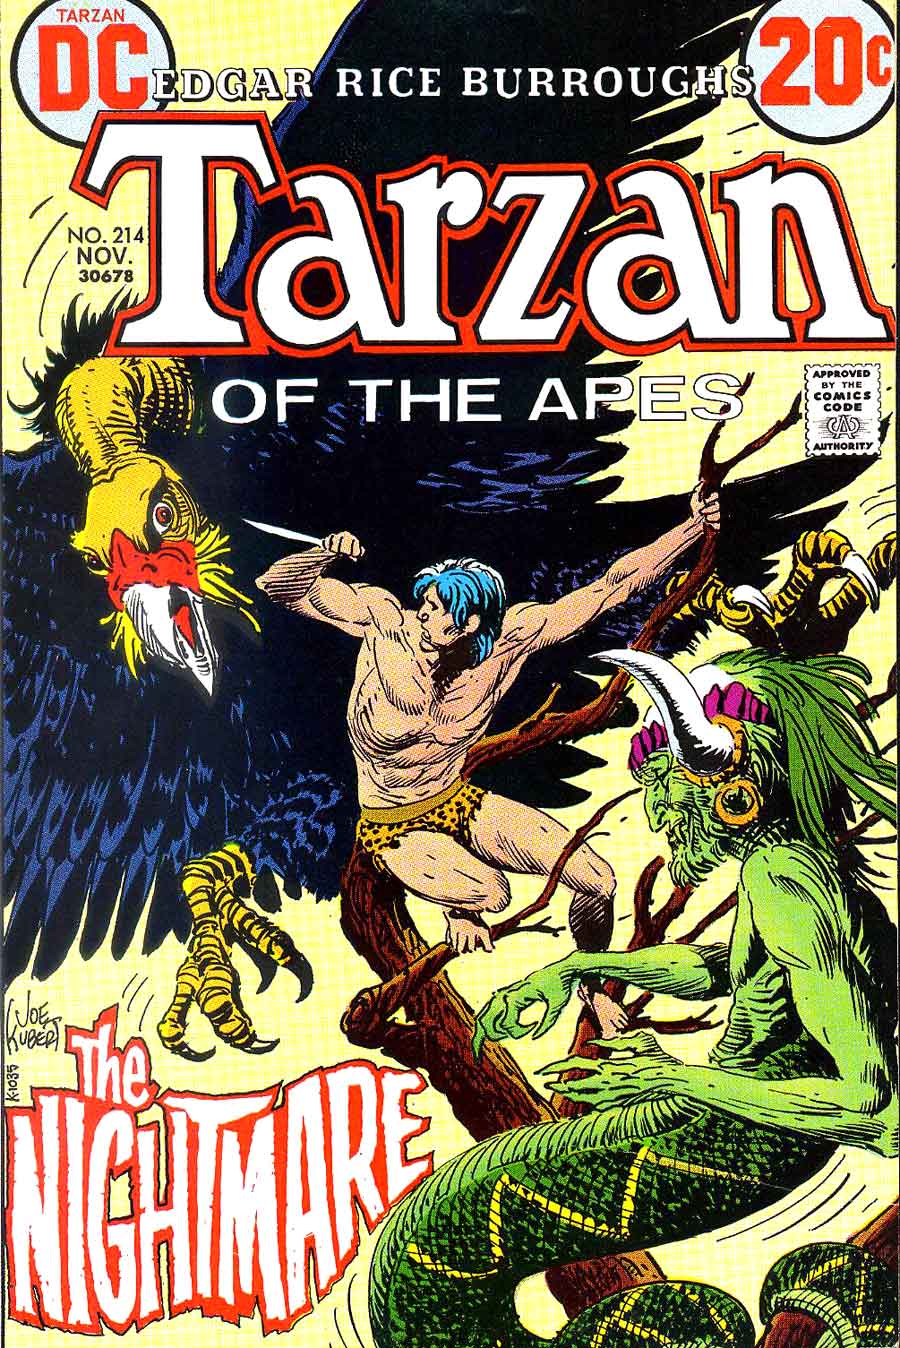 Tarzan v1 #214 dc comic book cover art by Joe Kubert